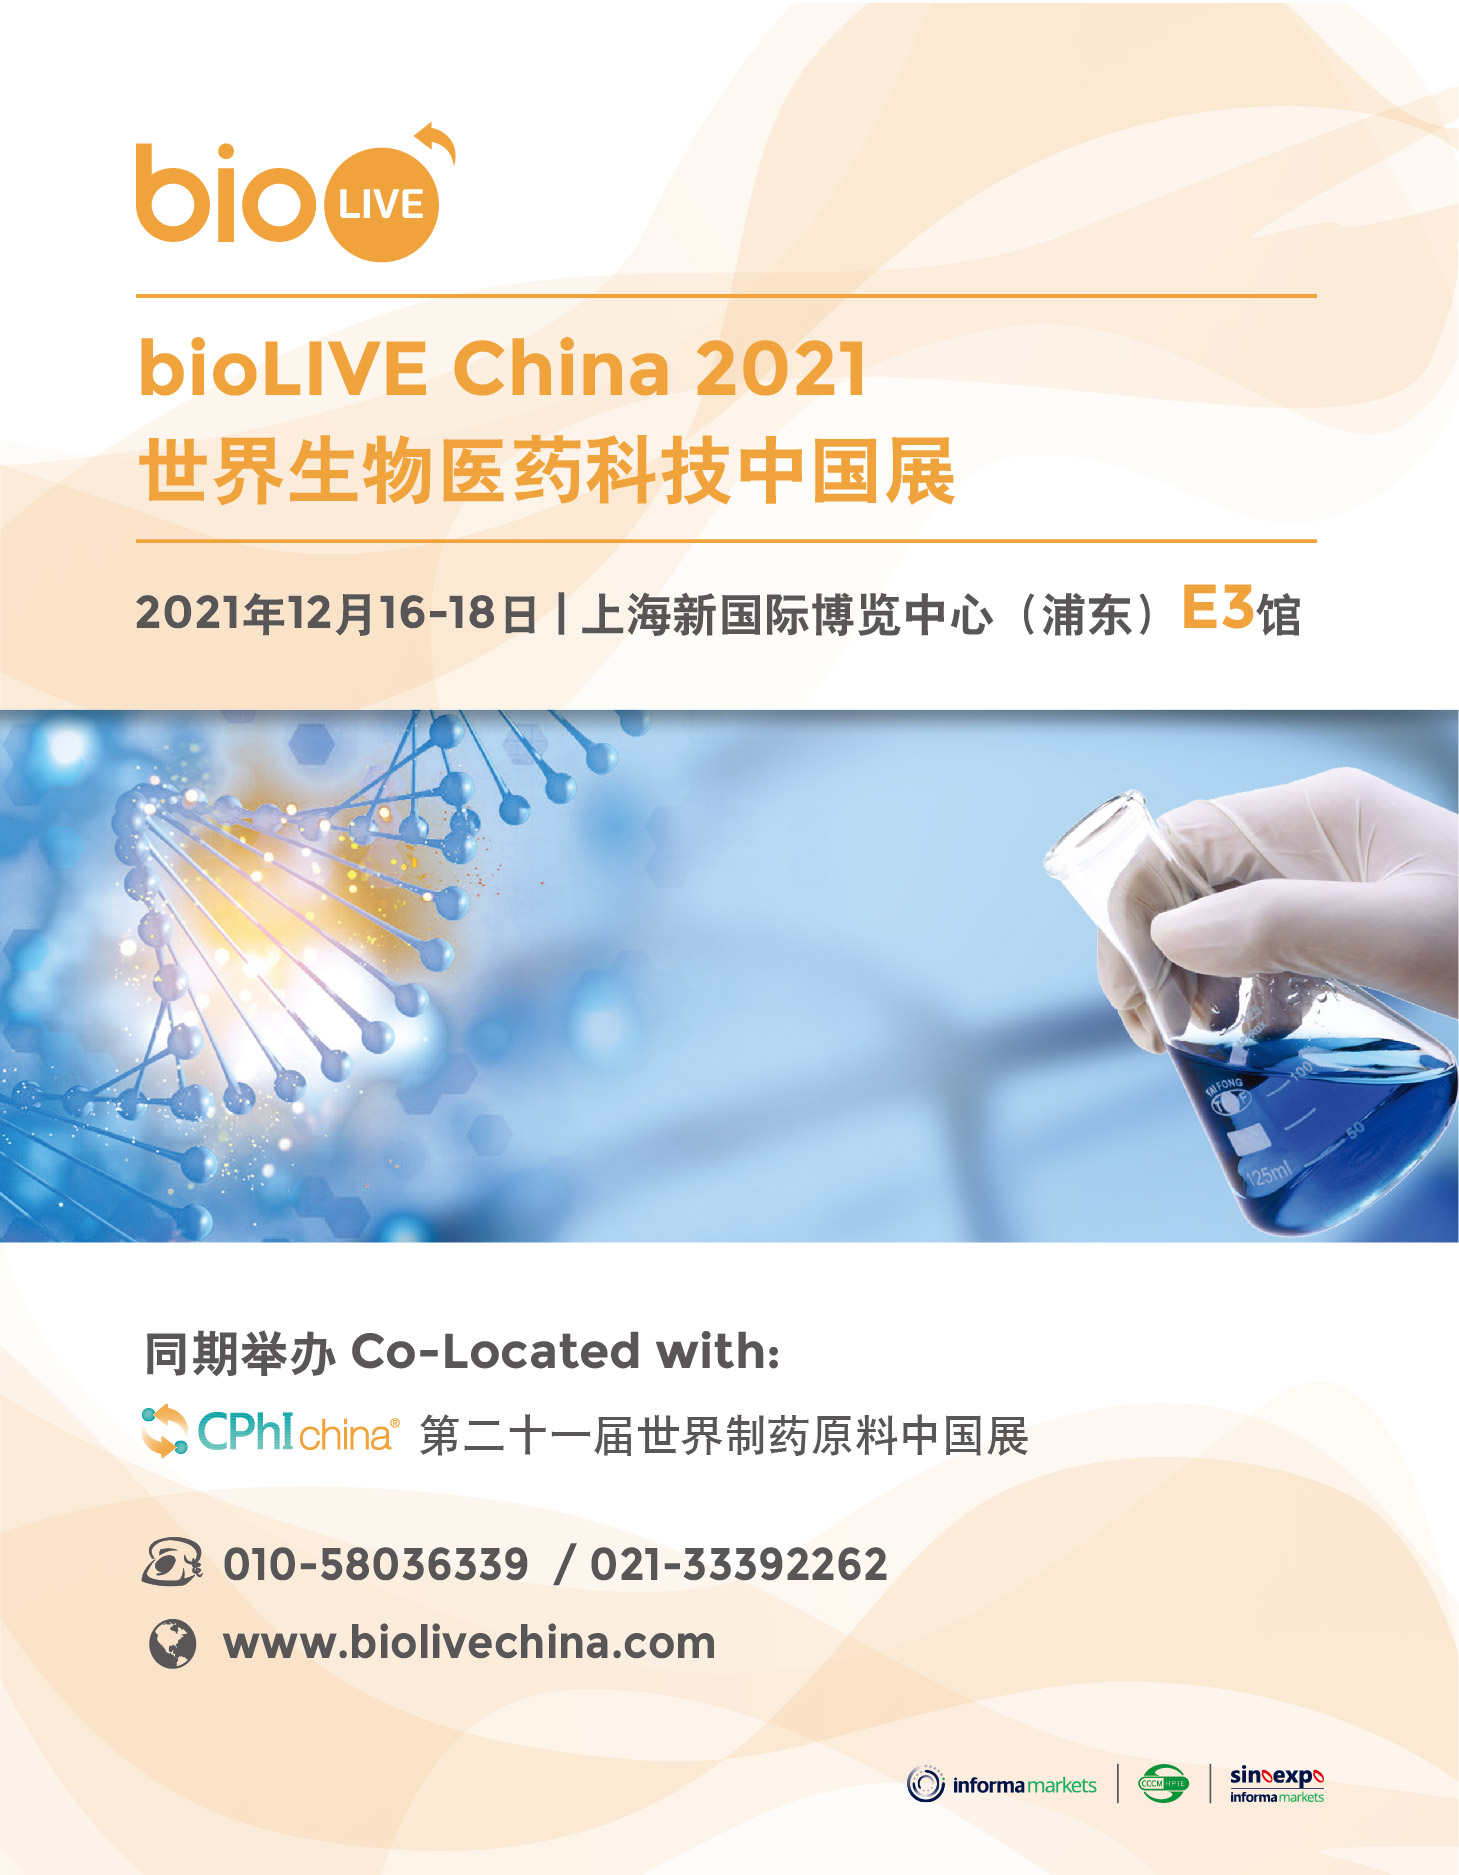 bioLIVE China 2020